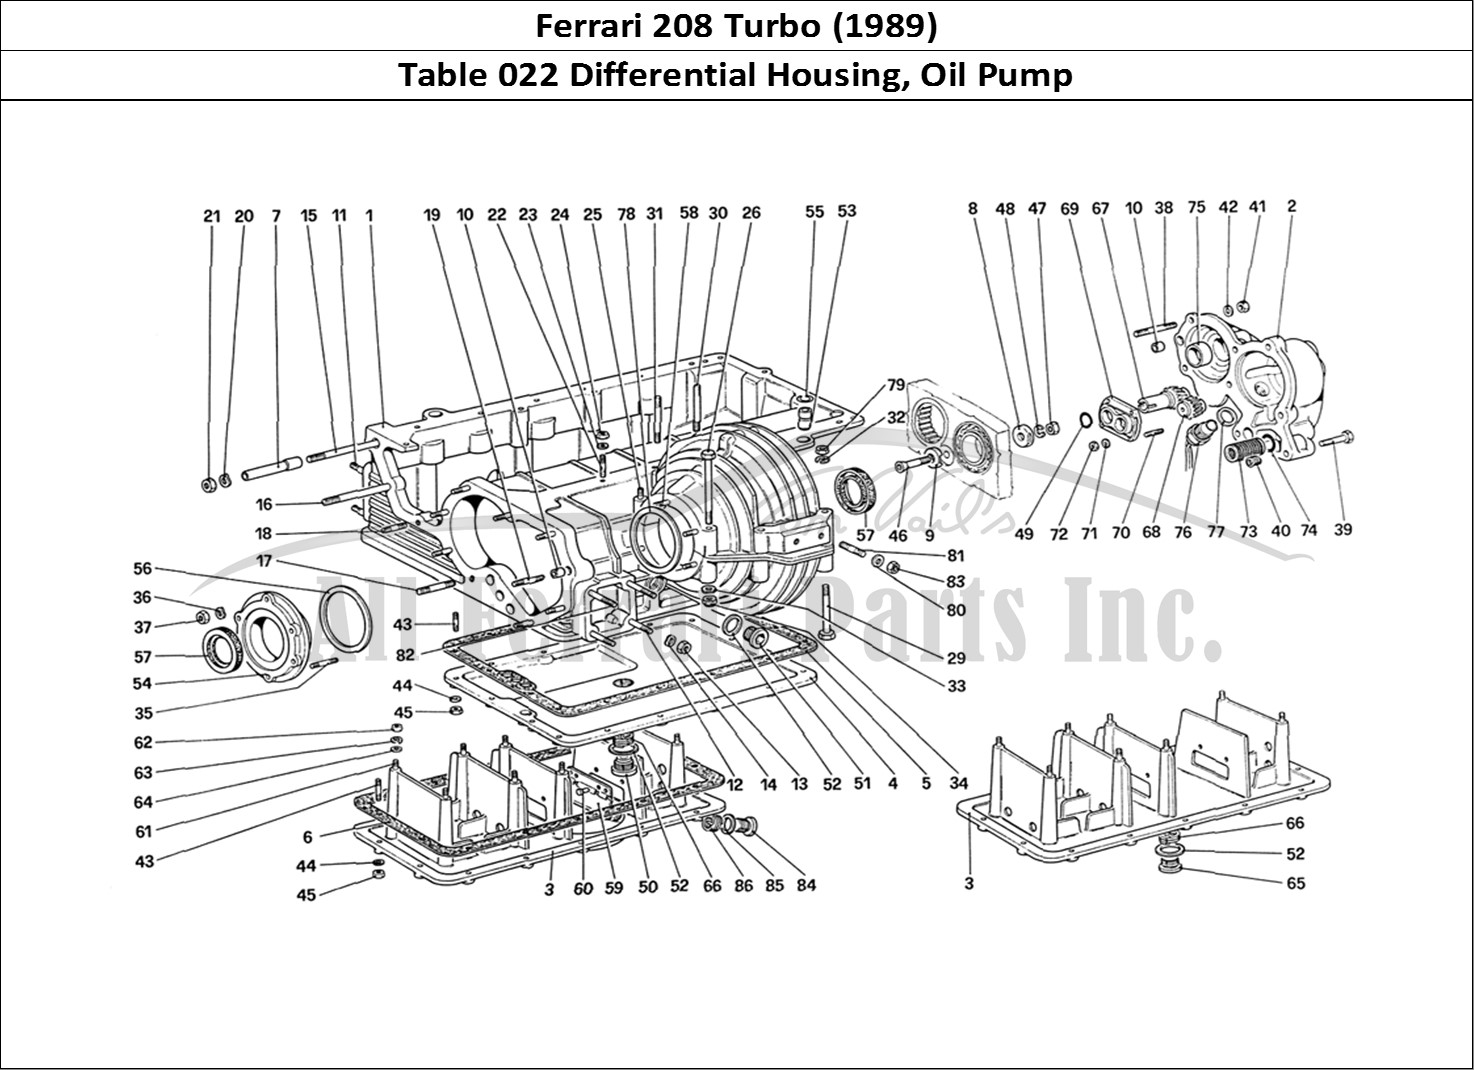 Ferrari Parts Ferrari 208 Turbo (1989) Page 022 Gearbox - Differential Ho